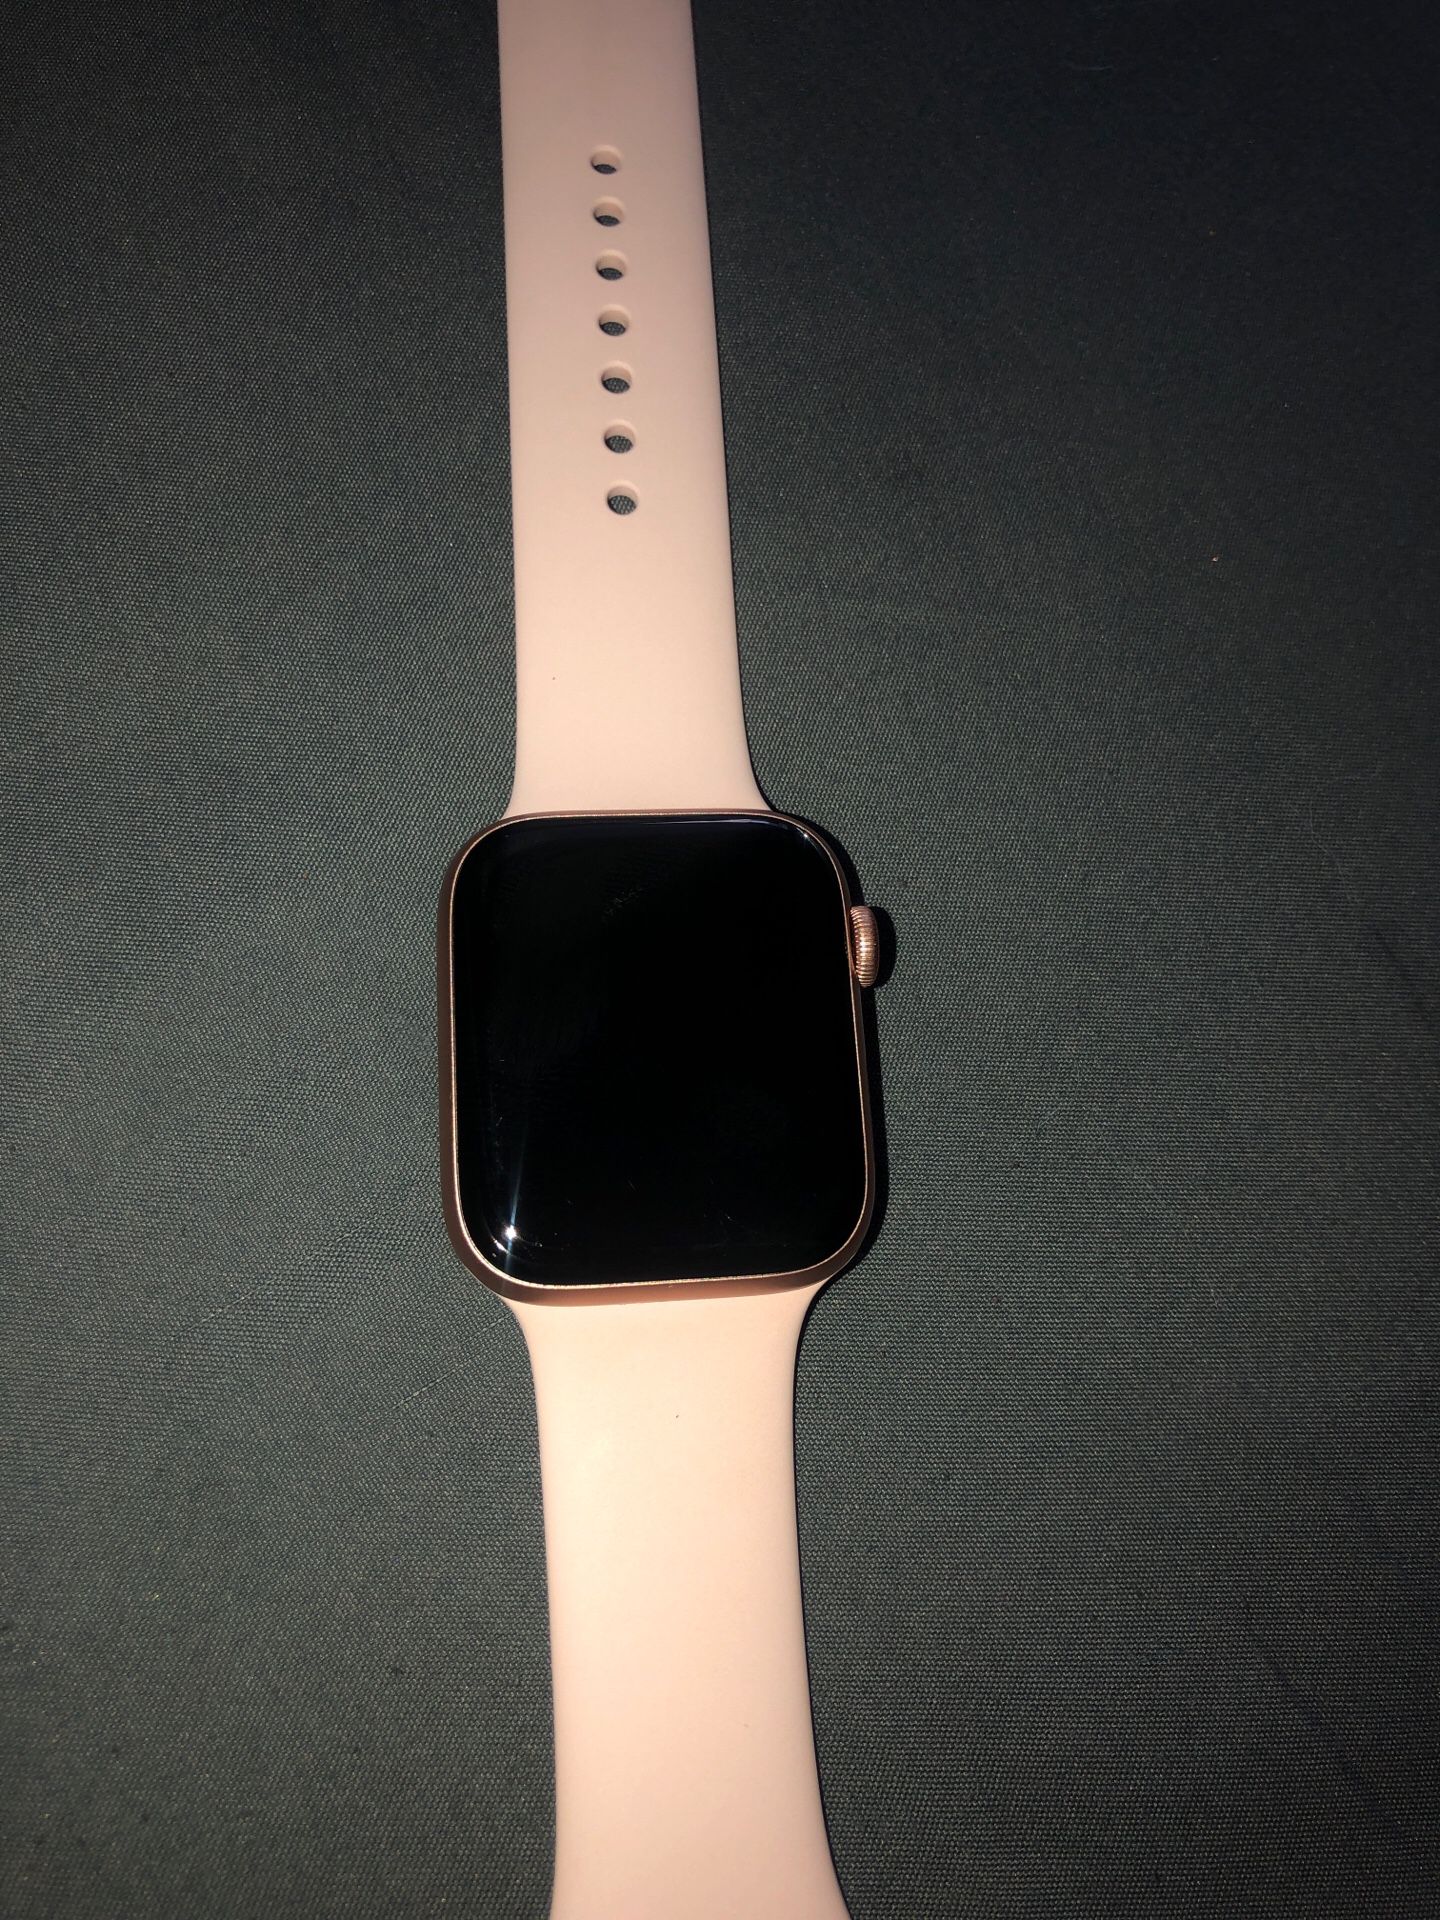 Apple Watch Series 4 Rose Gold